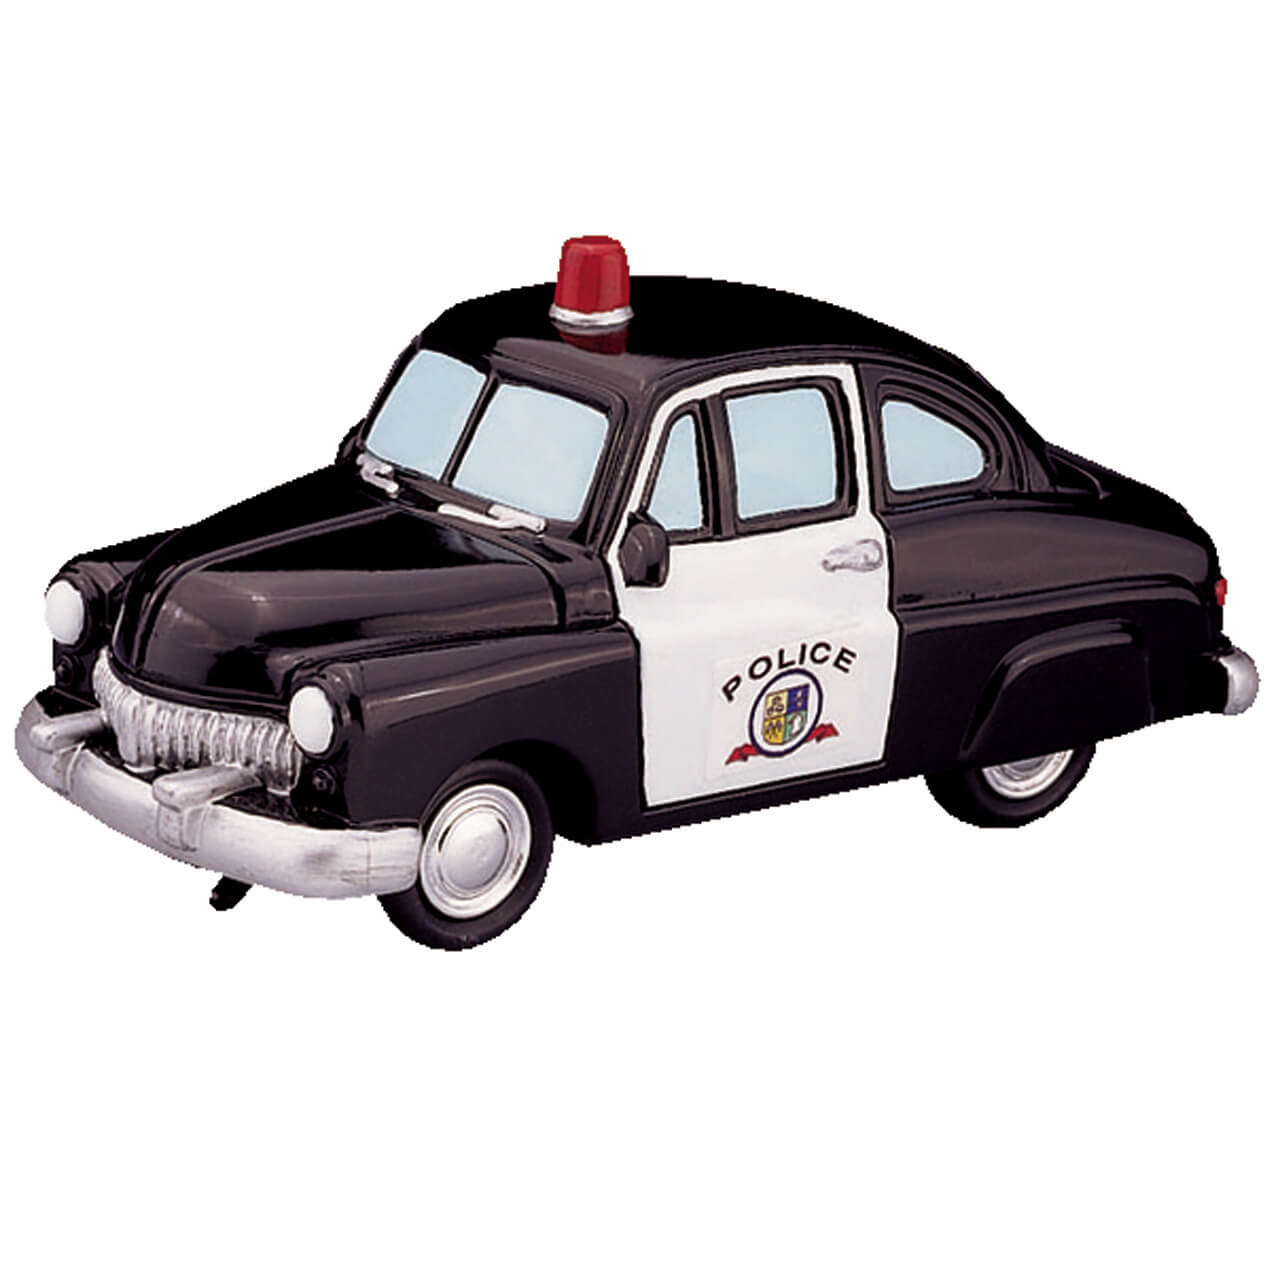 Police Squad Car Lemax